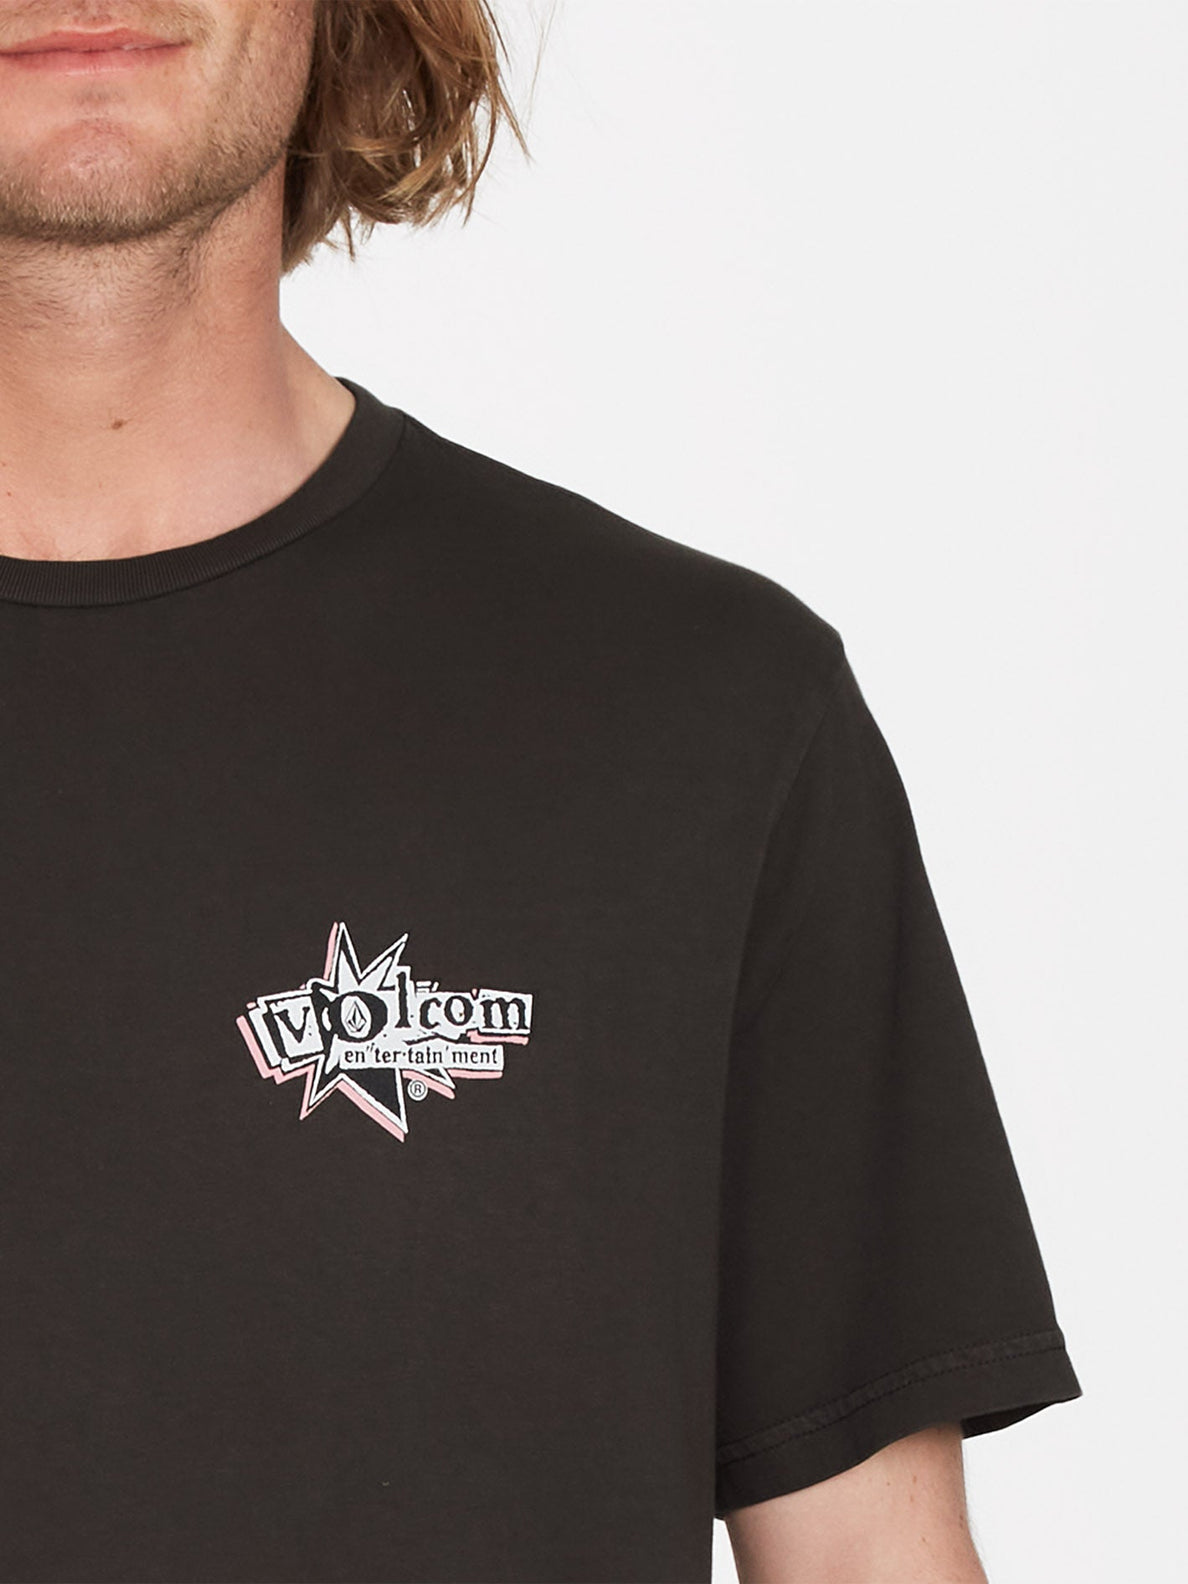 Camiseta Volcom V Entertainment - Rinsed Black